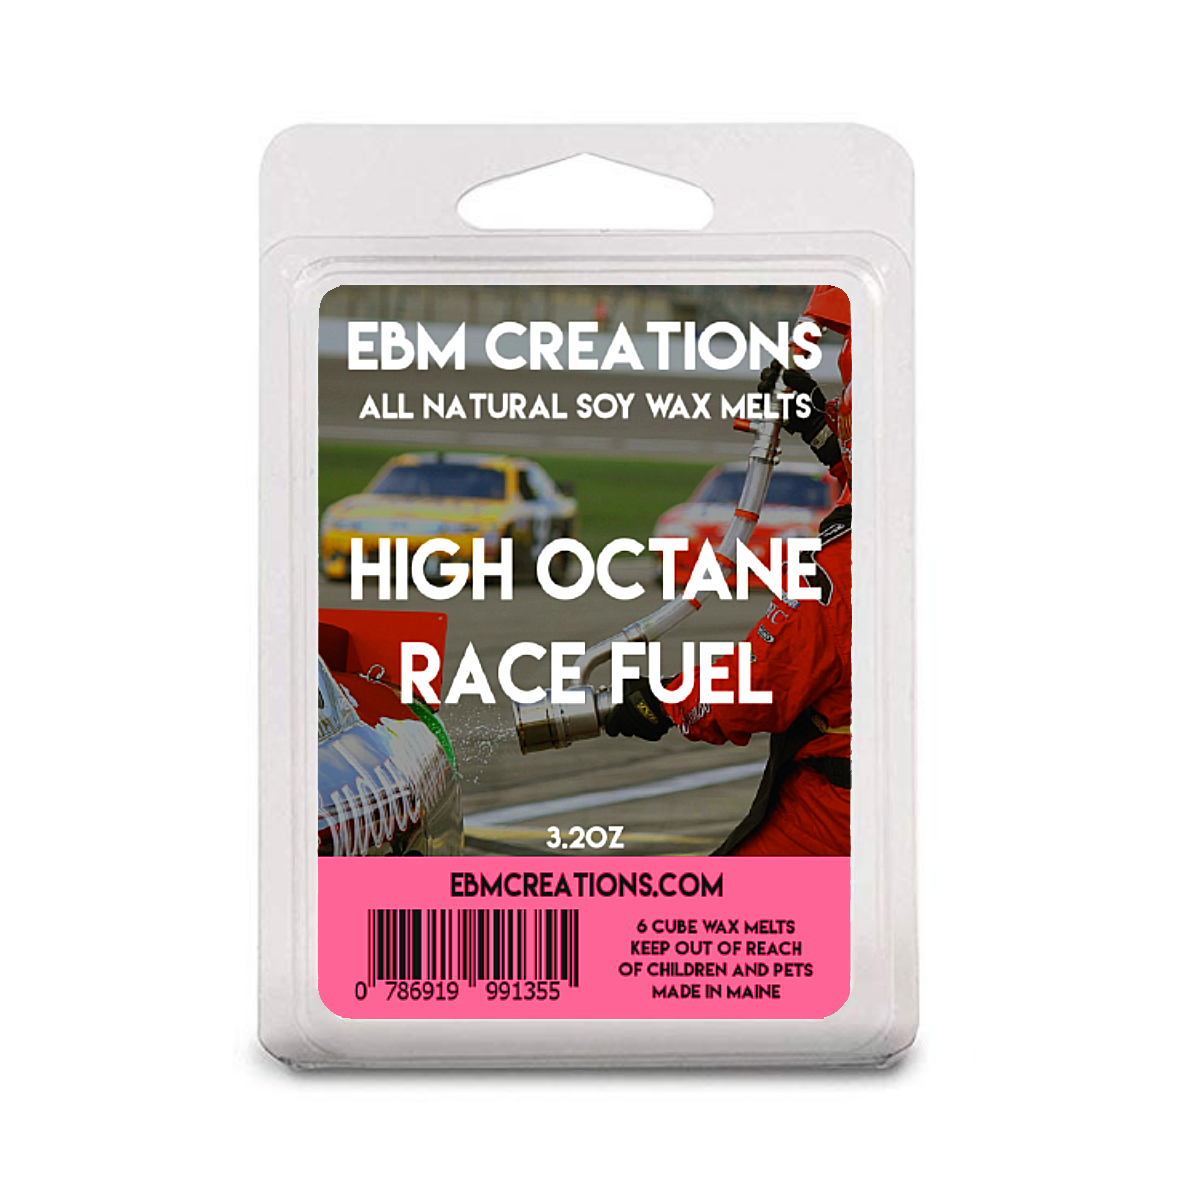 High Octane Race Fuel - 3.2 oz Clamshell